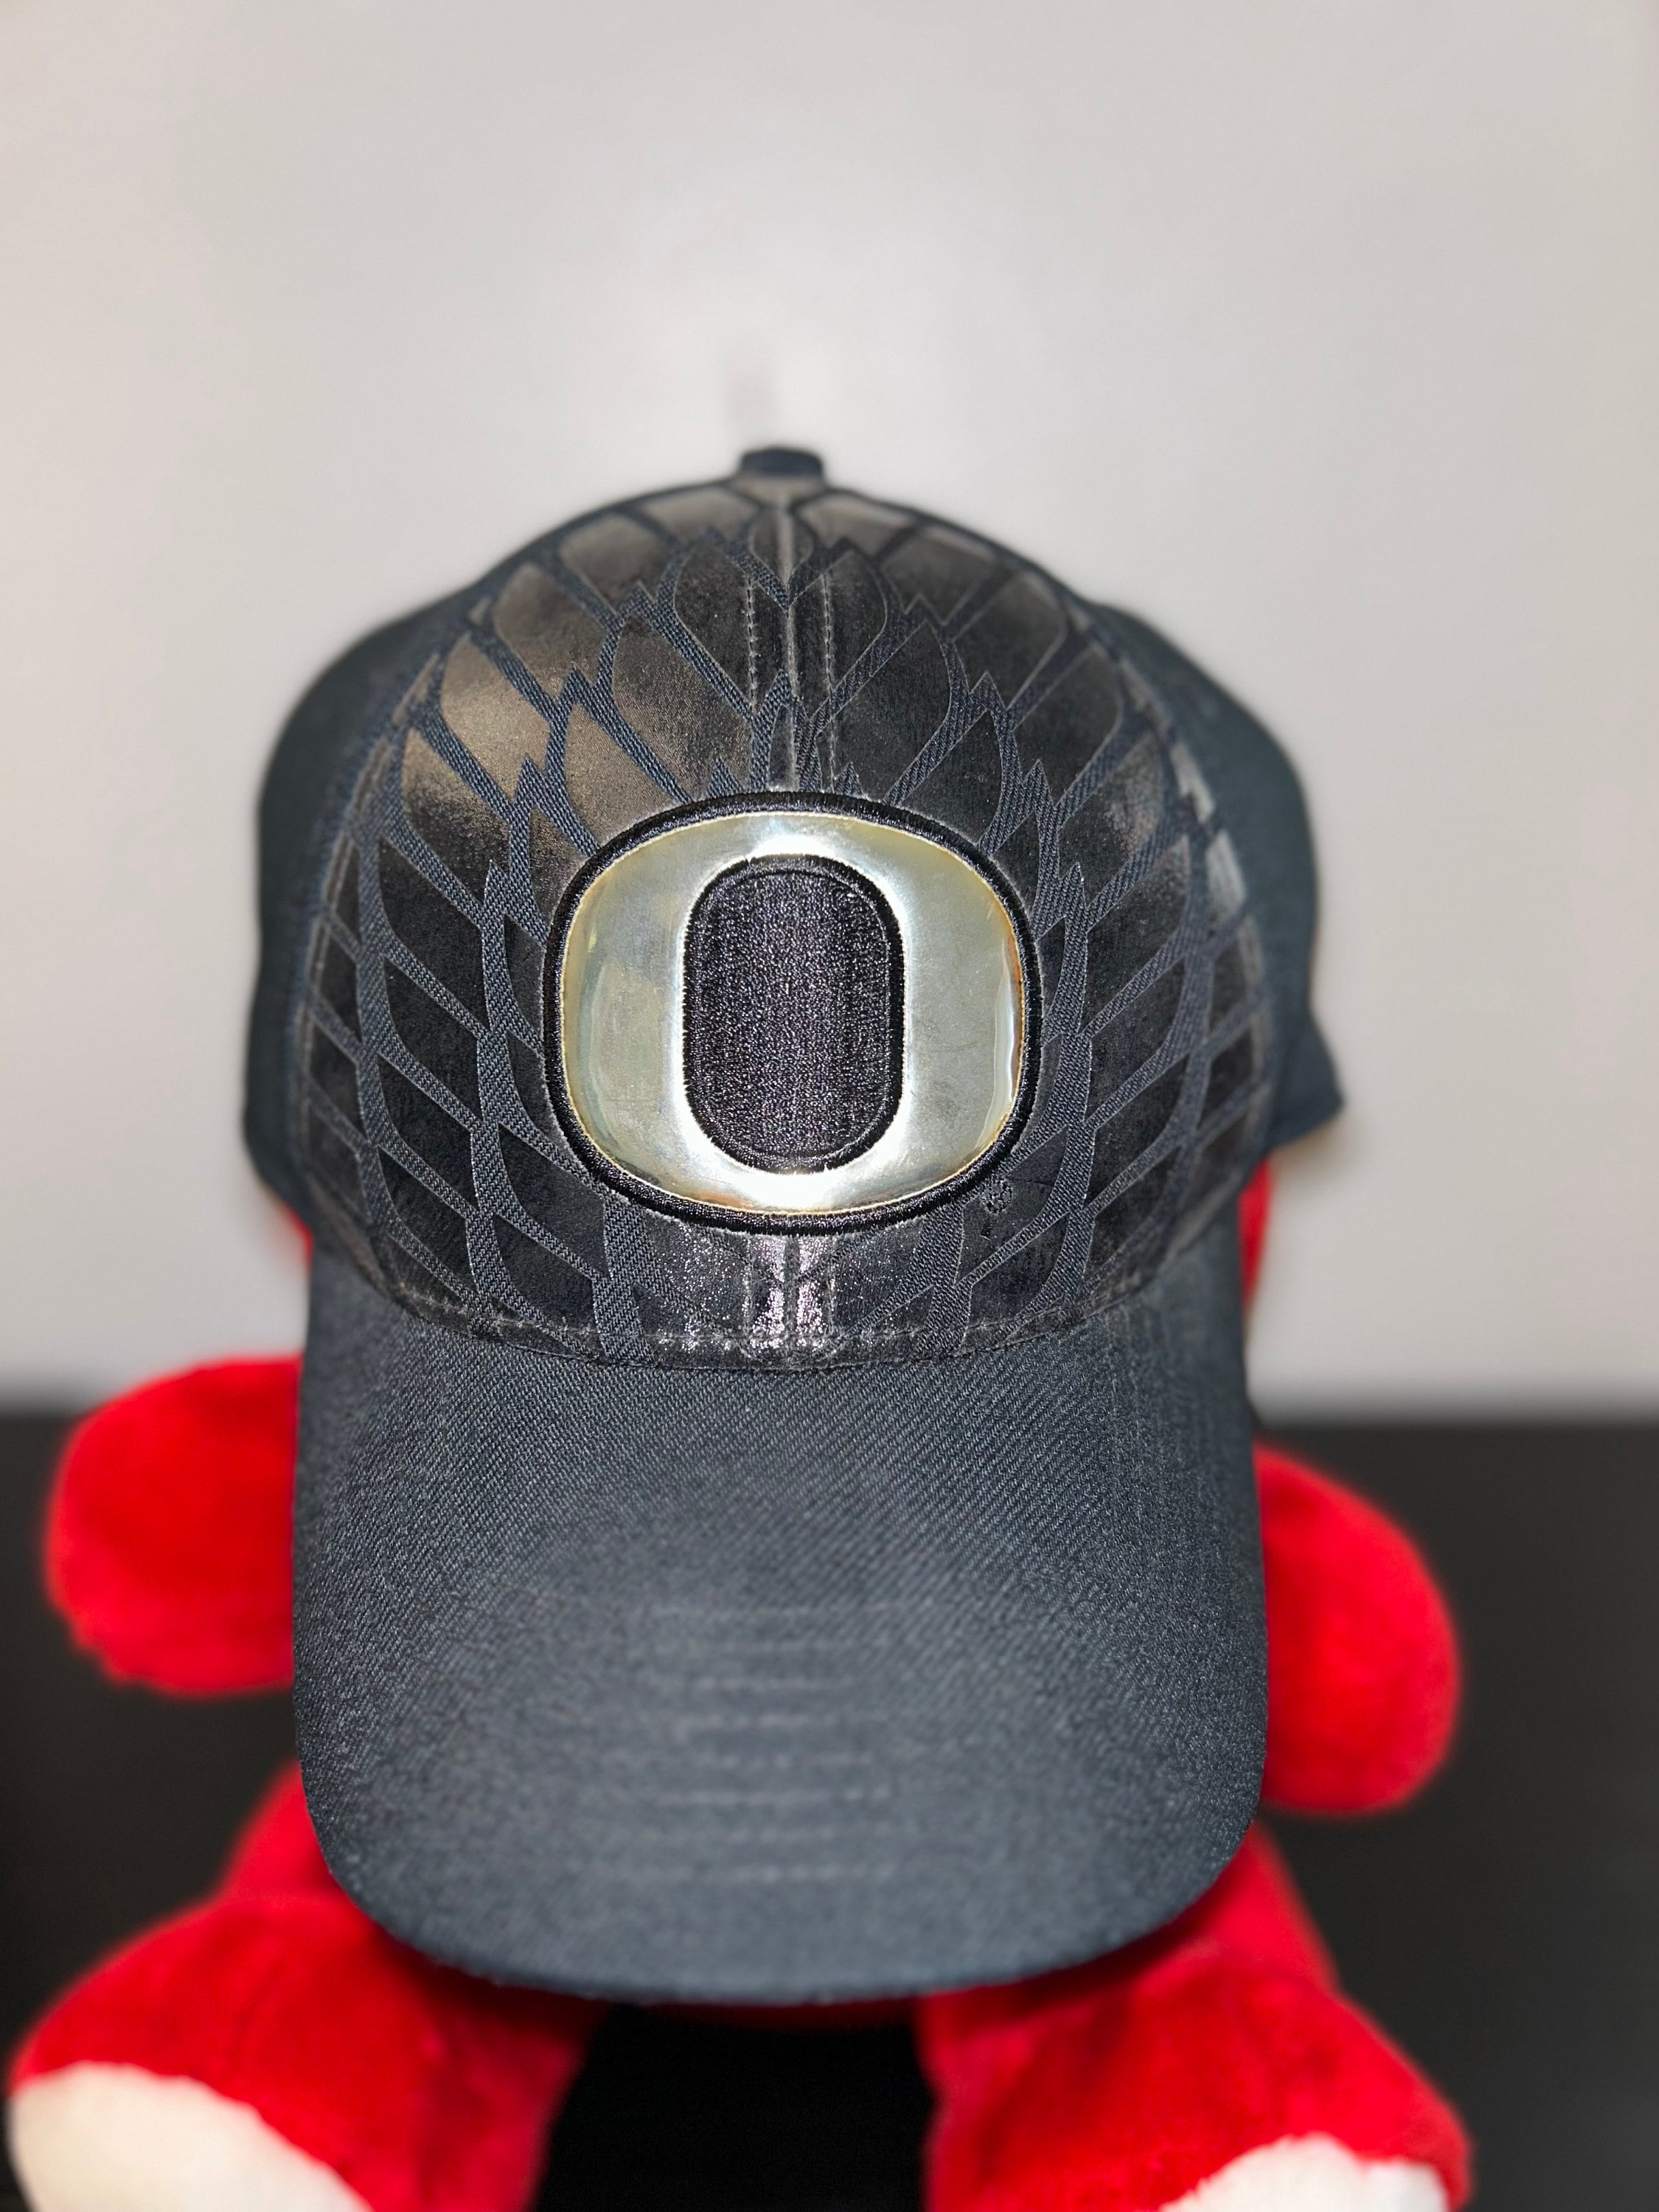 Vintage University of Oregon UO Ducks Trucker Hat - OS – Jak of all Vintage